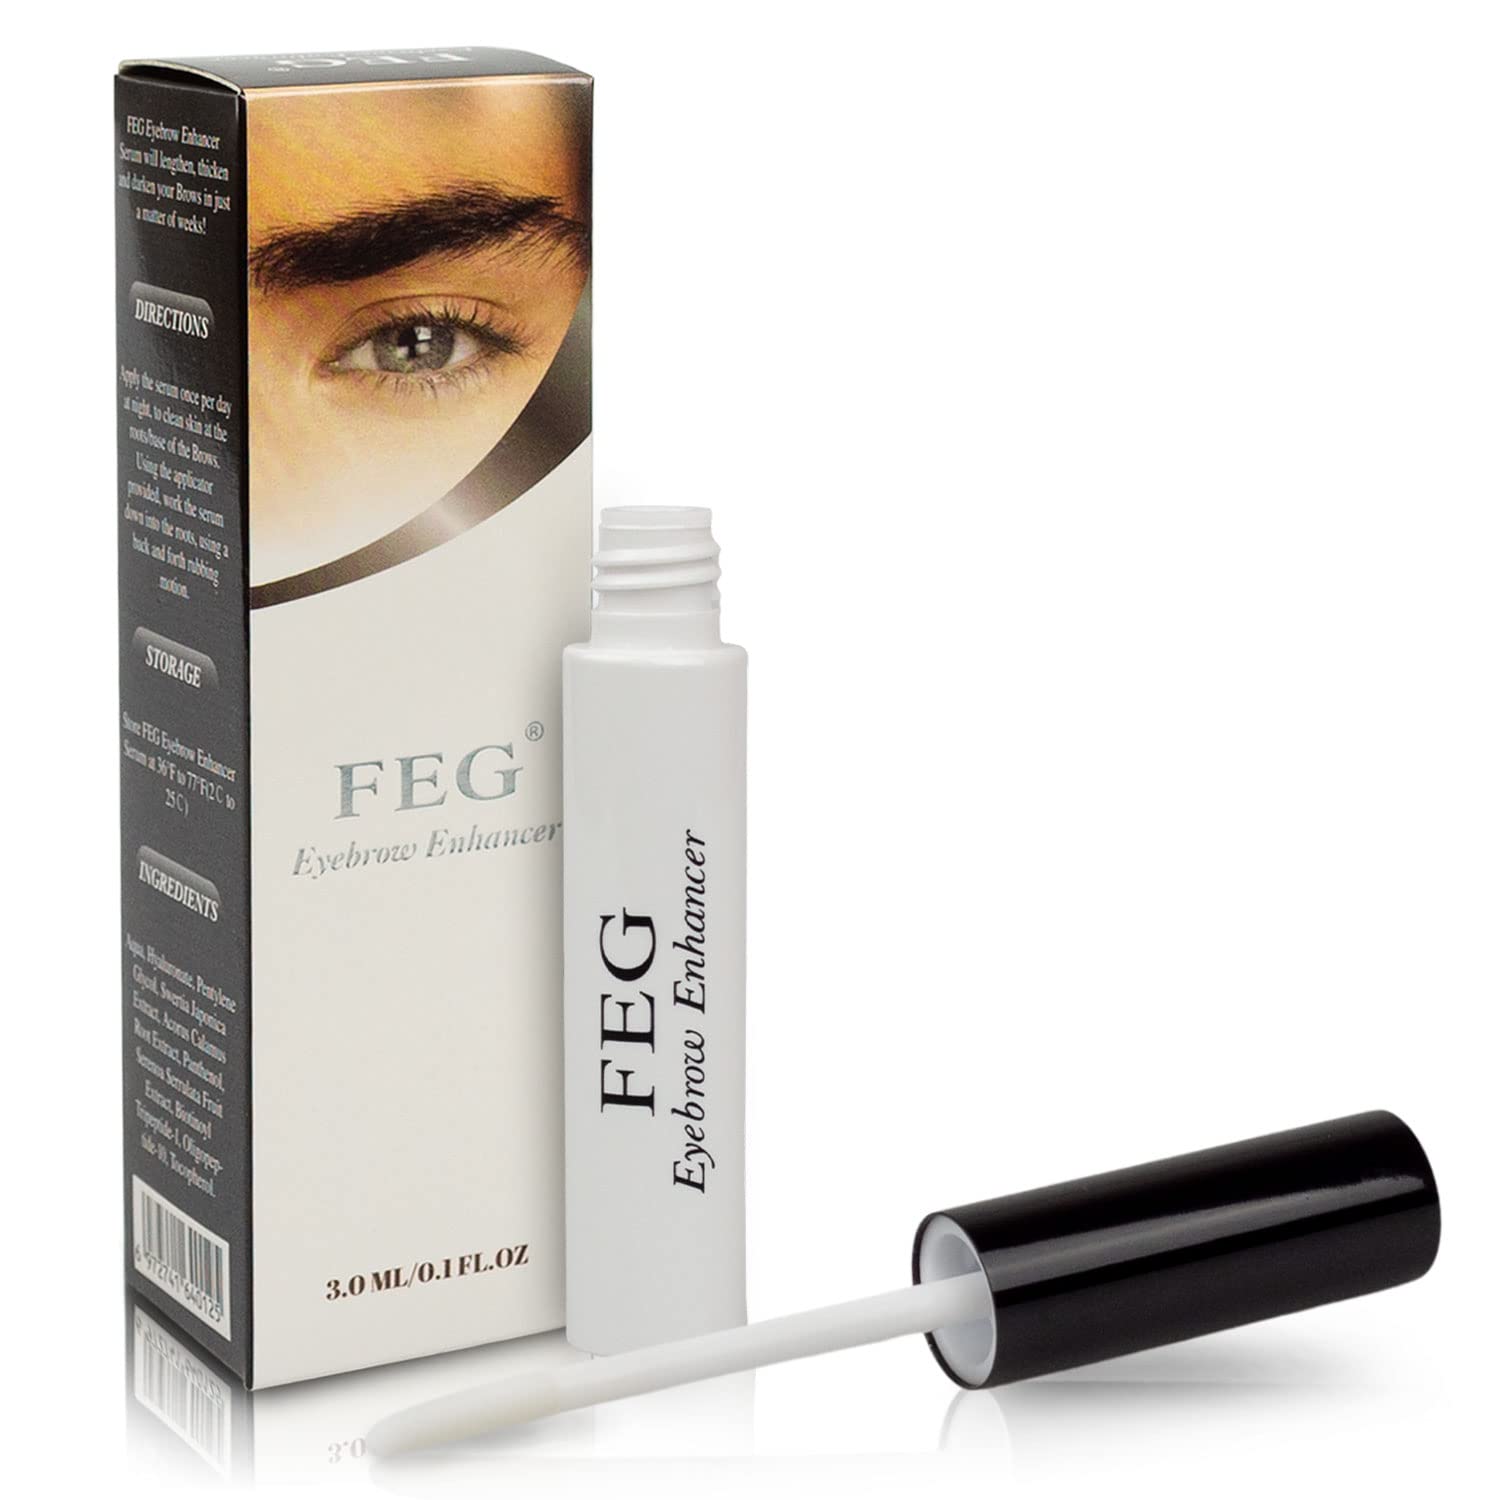 FEG Eyebrow Eye Brow Growth Length Thickness Darkness Enhancer Serum 100% Natural